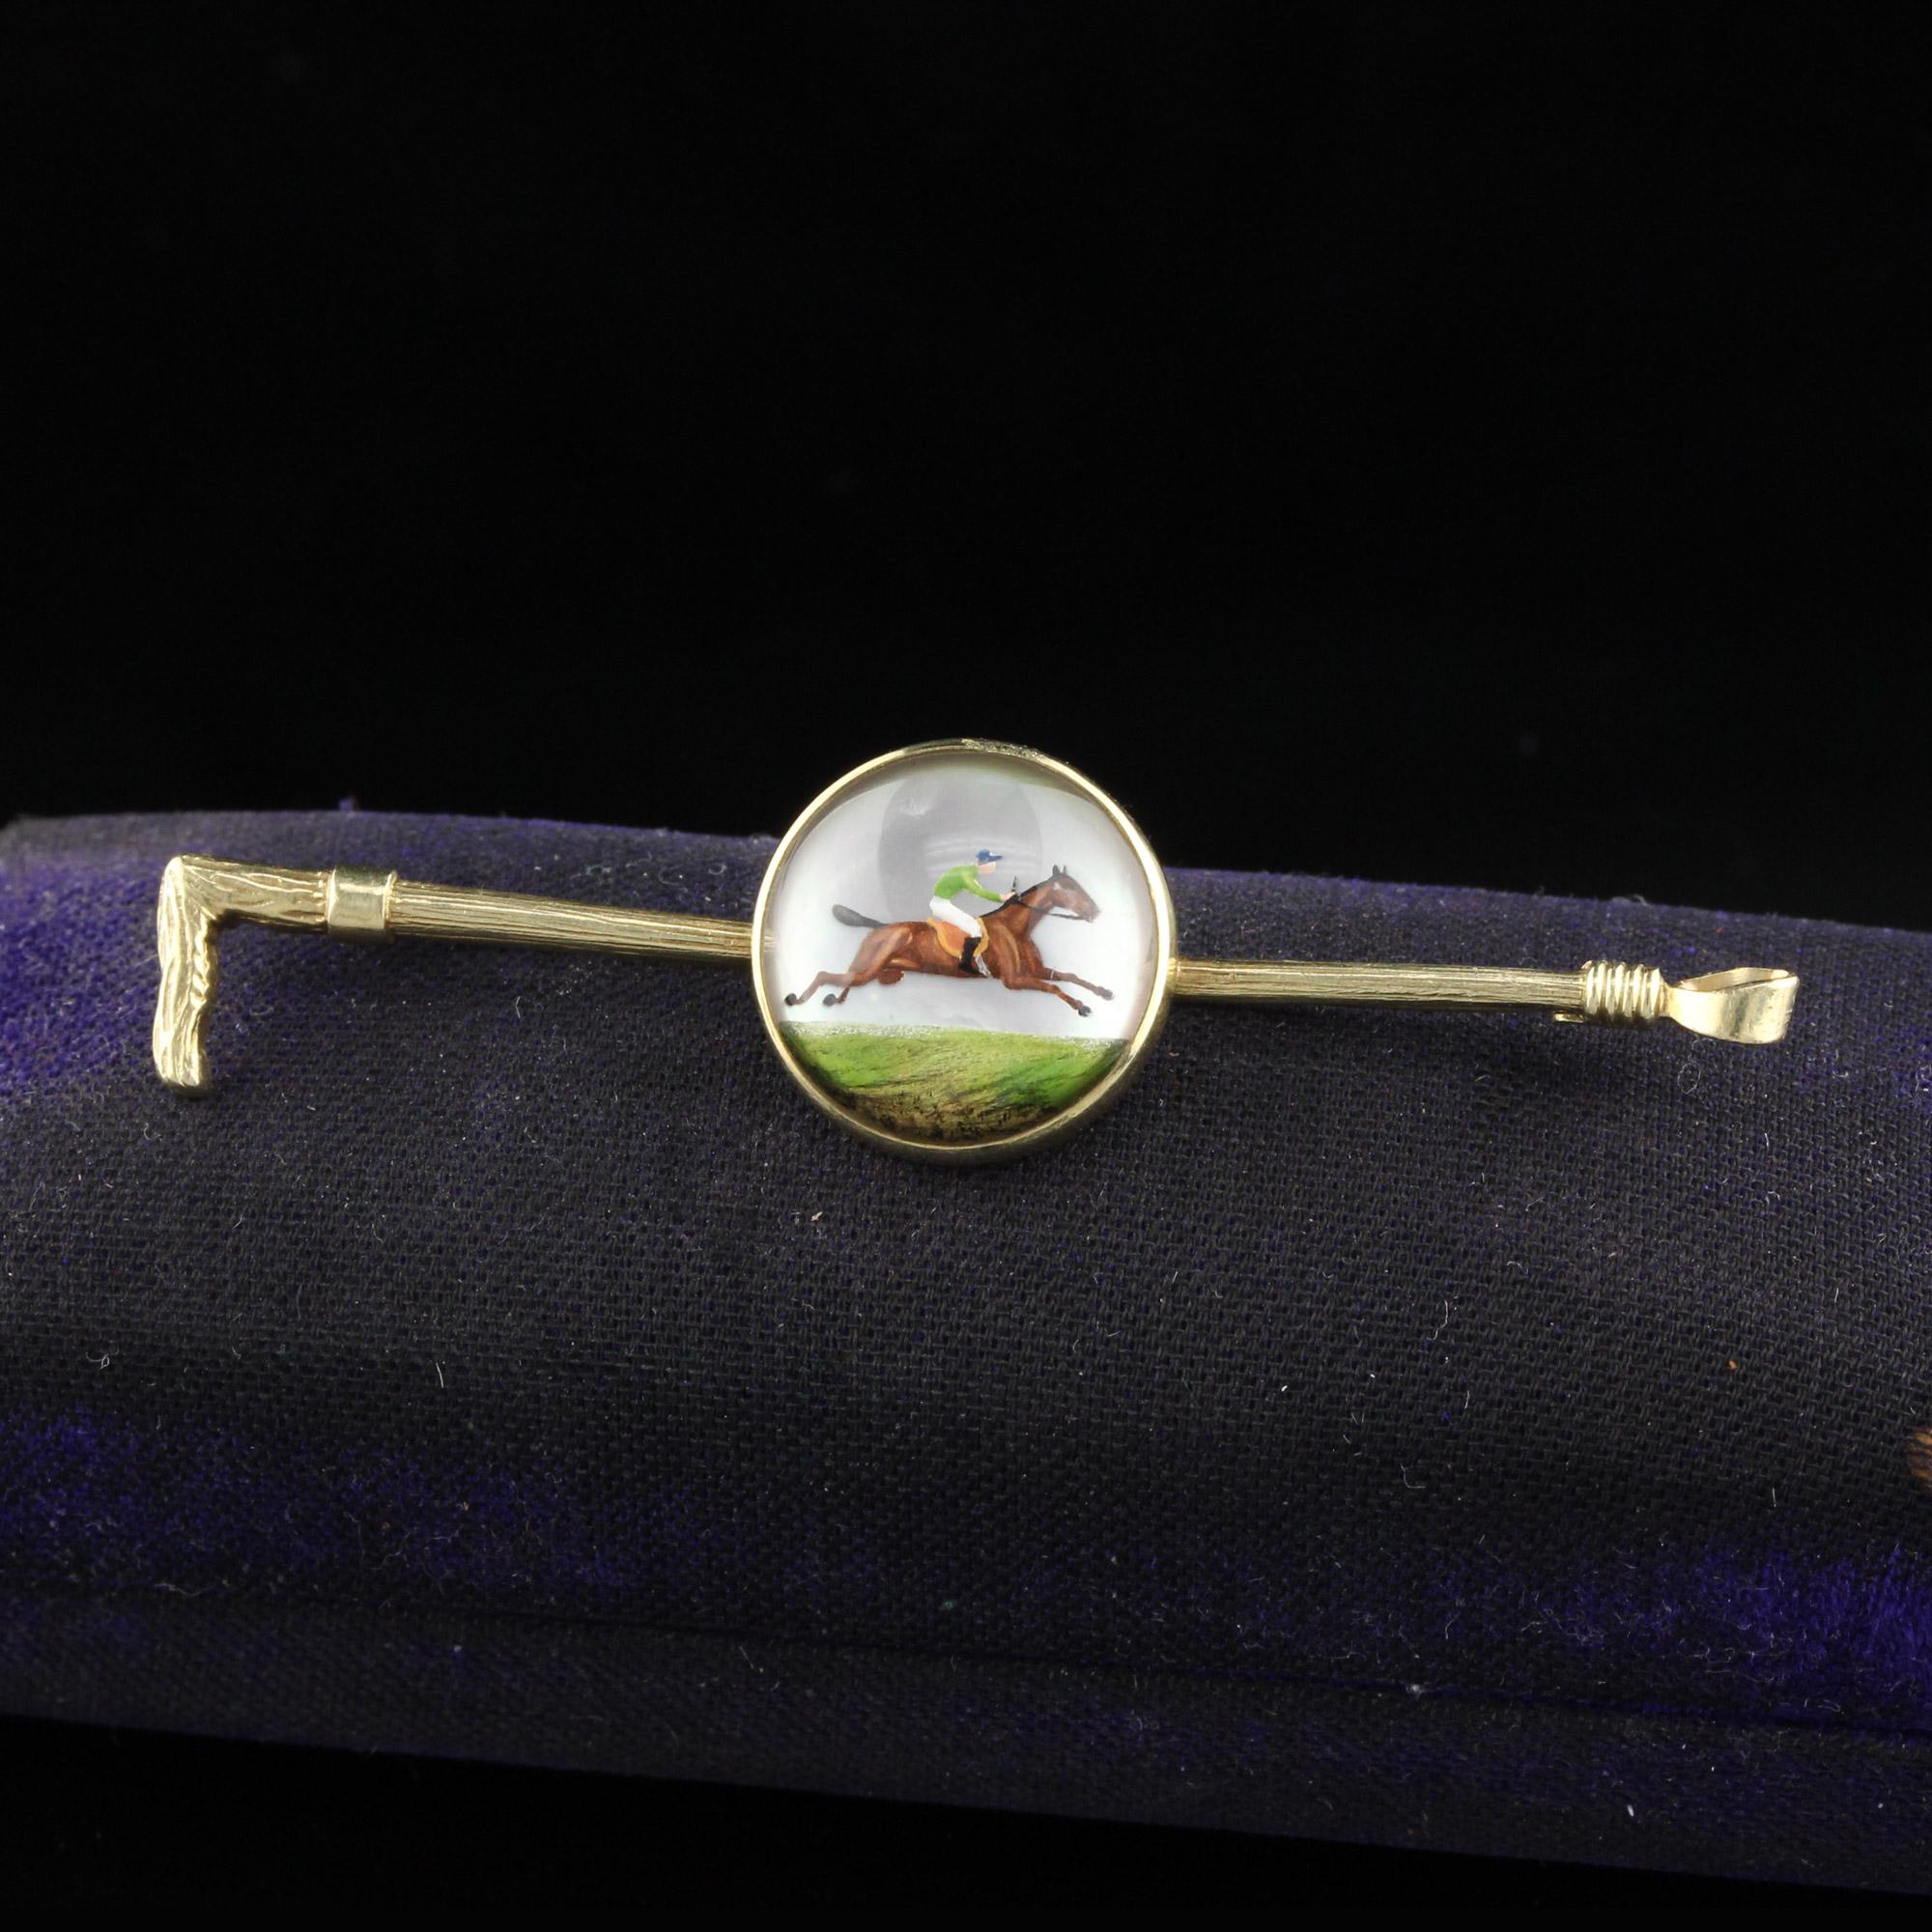 Vintage estate equestrian / jockey reverse crystal bar brooch.

Metal: 14K Yellow Gold

Weight: 5.2 Grams 

Measurements: 15 x 58 mm